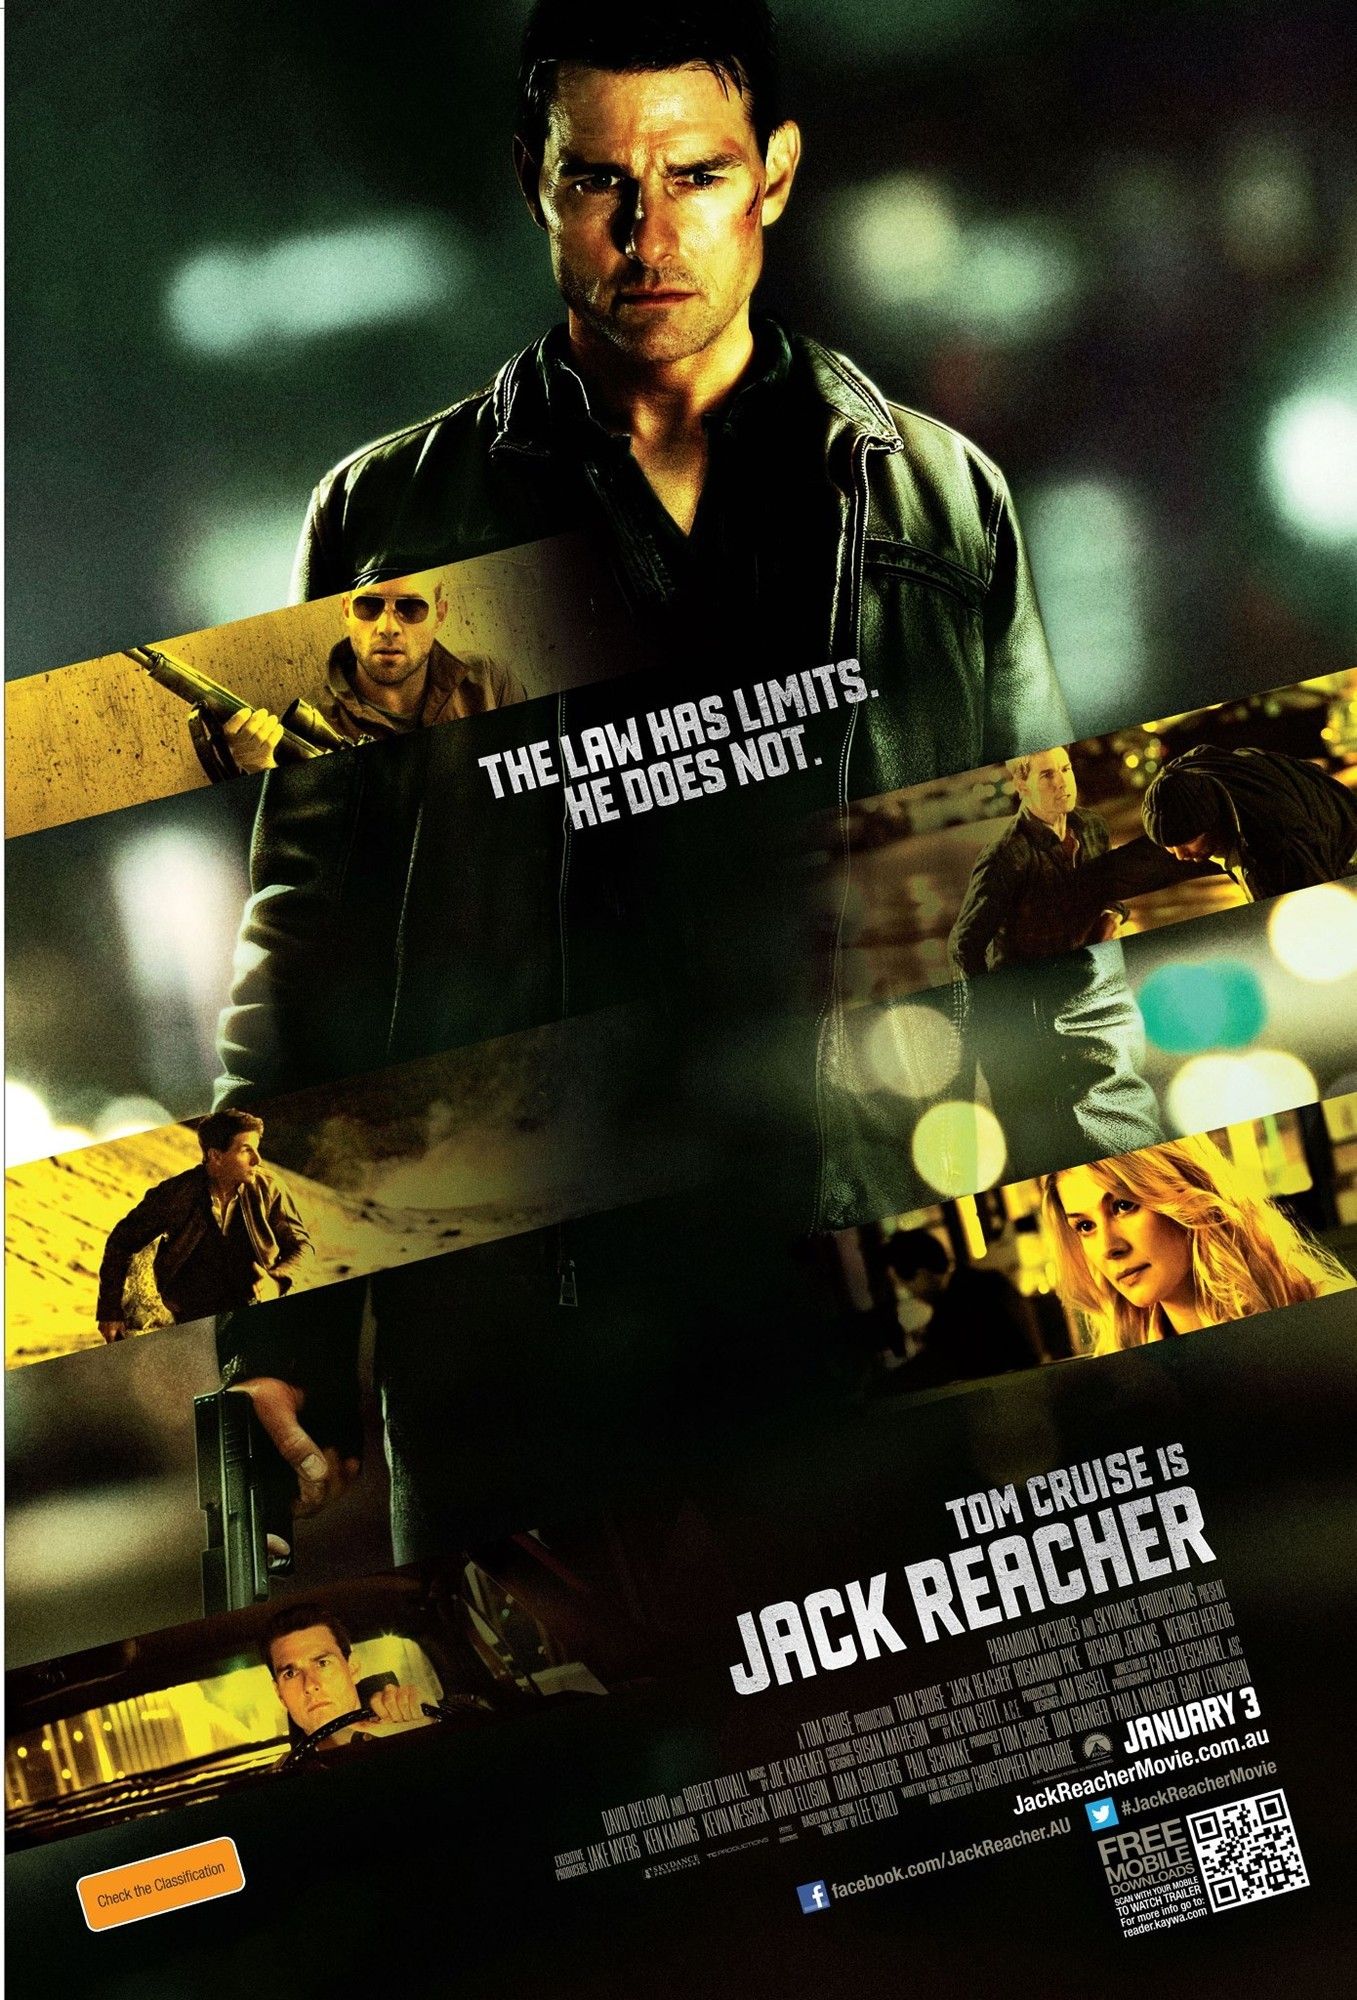 Watch Jack Reacher 2 Online Full HD Movie